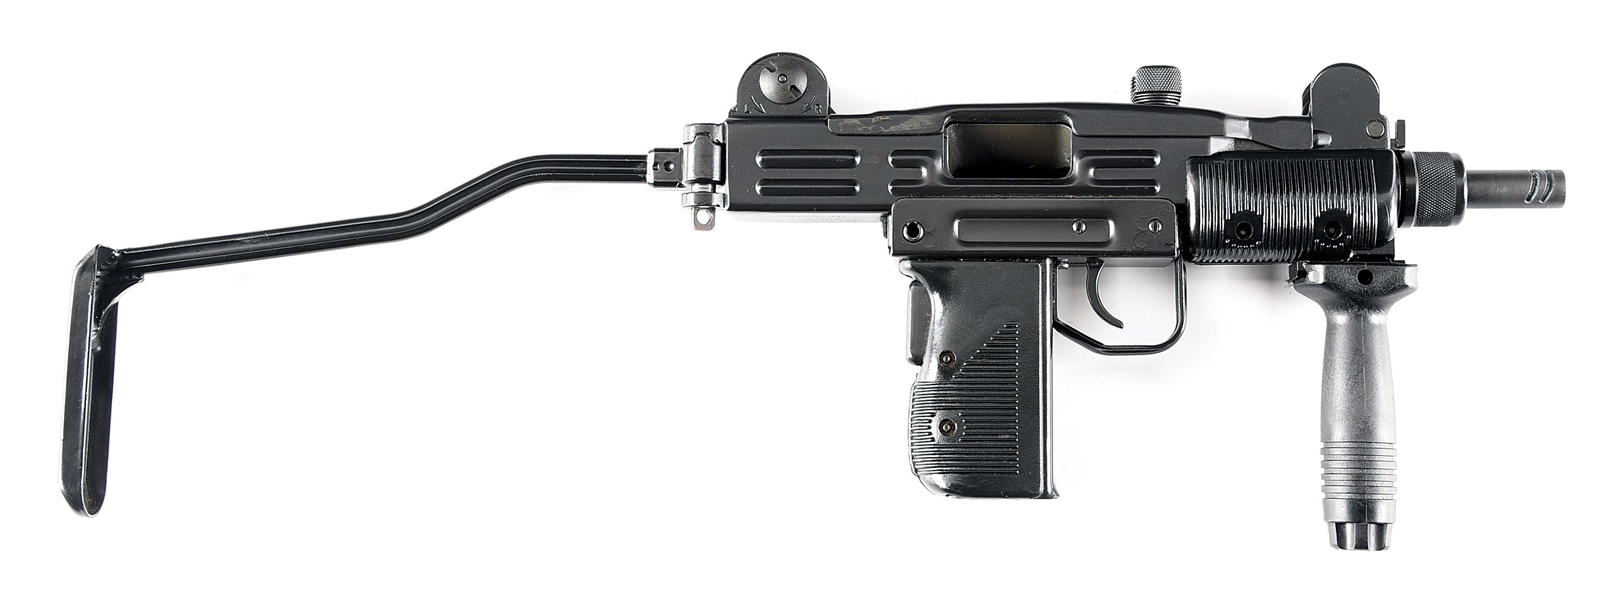 (N) IMI / ACTION ARMS MINI UZI SUBMACHINE GUN (PRE-86 DEALER SAMPLE).